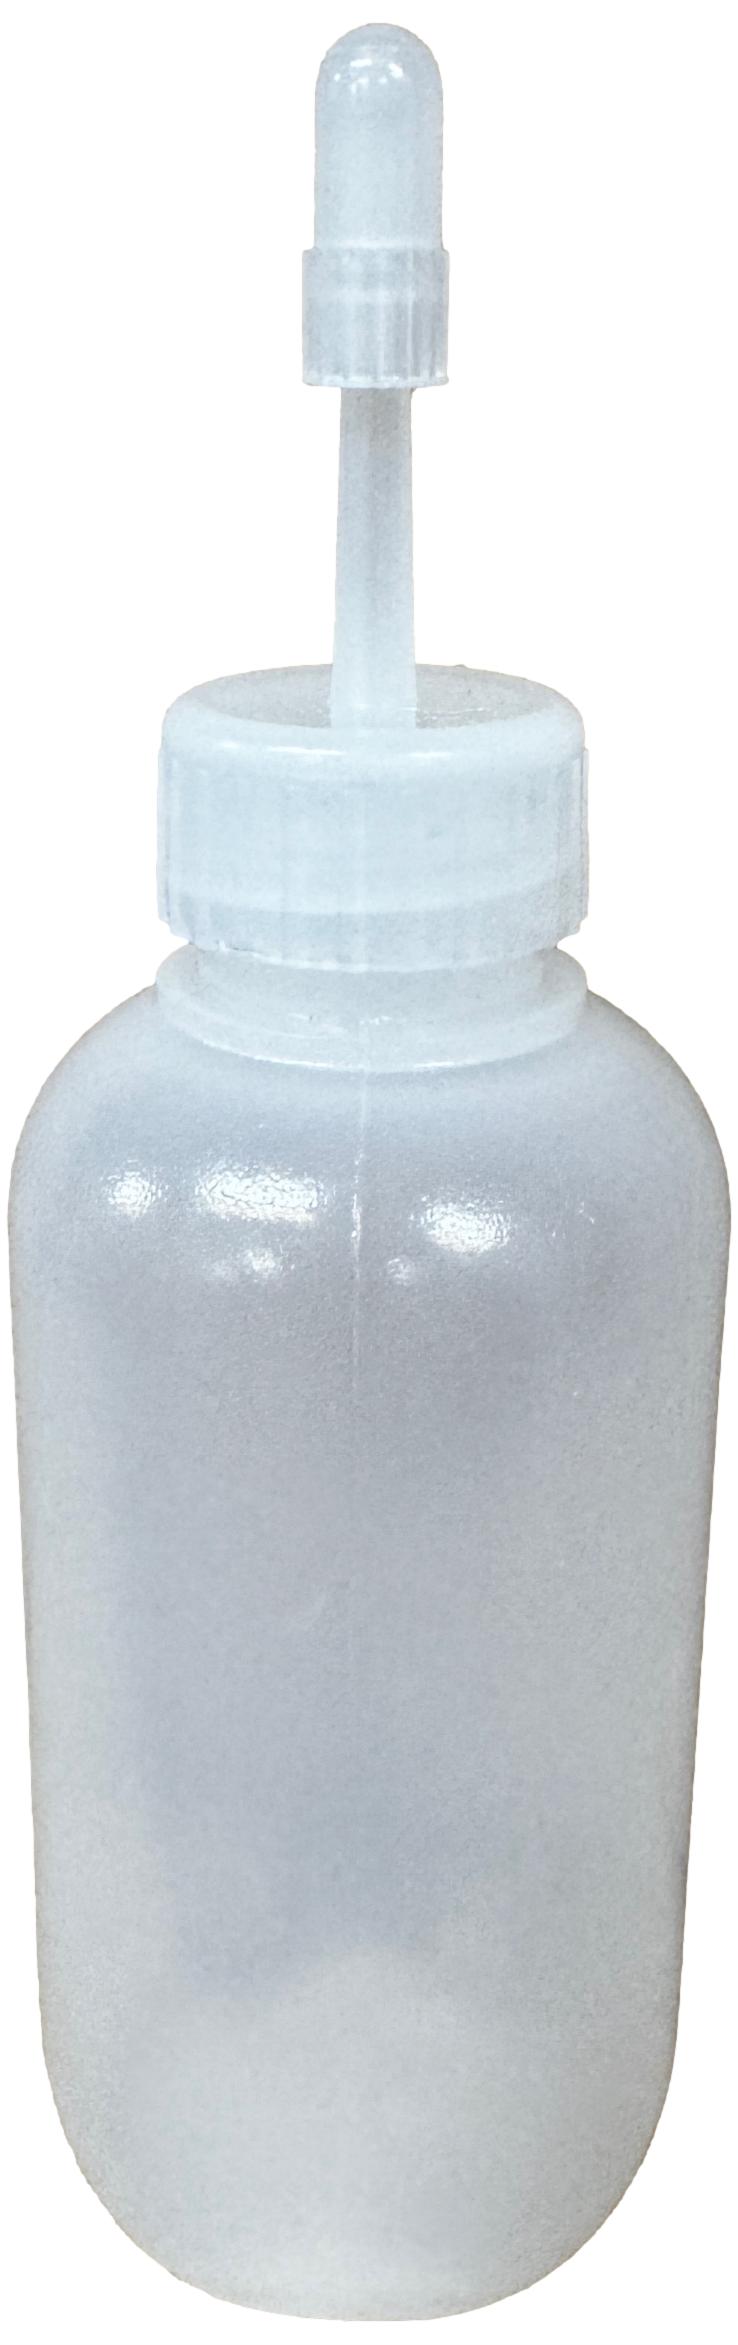 Deluxe Glue Bottle